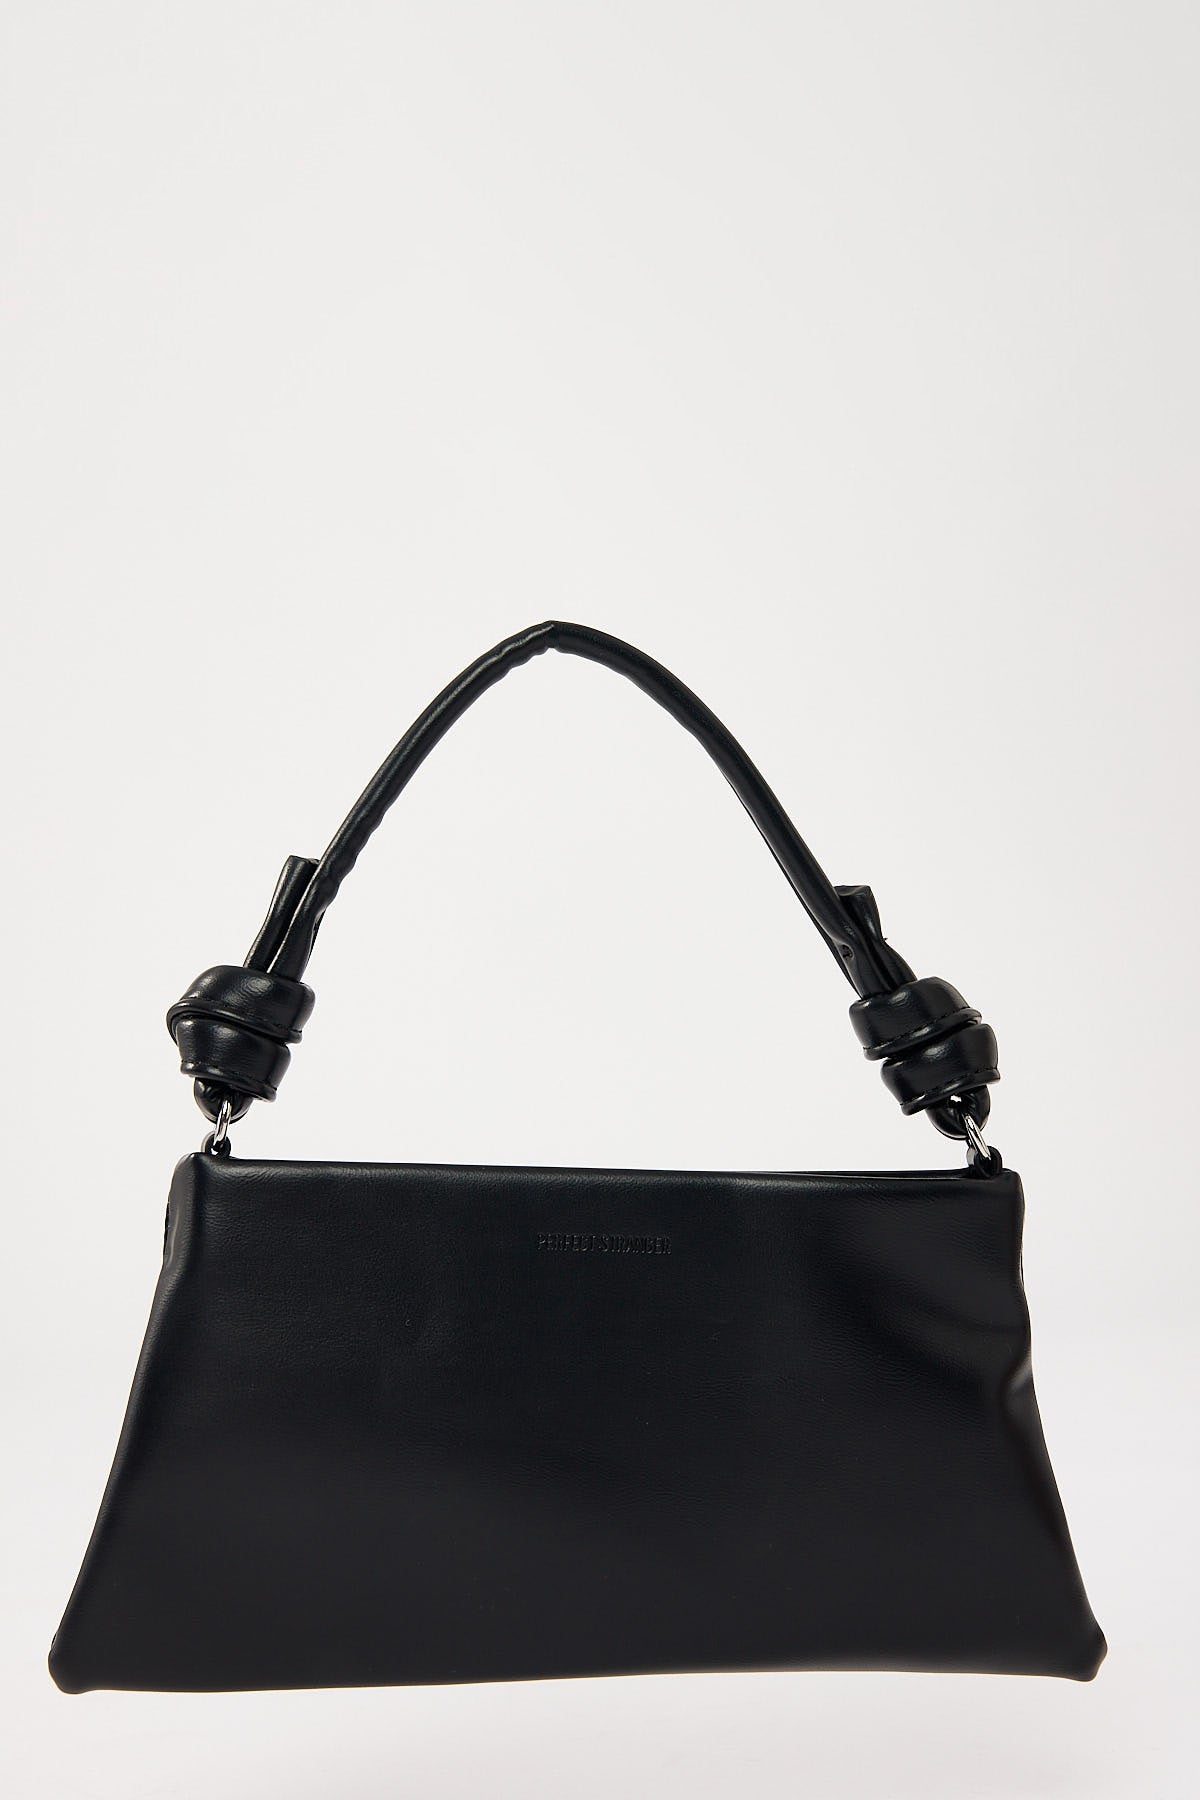 Perfect Stranger Diana Handbag Black